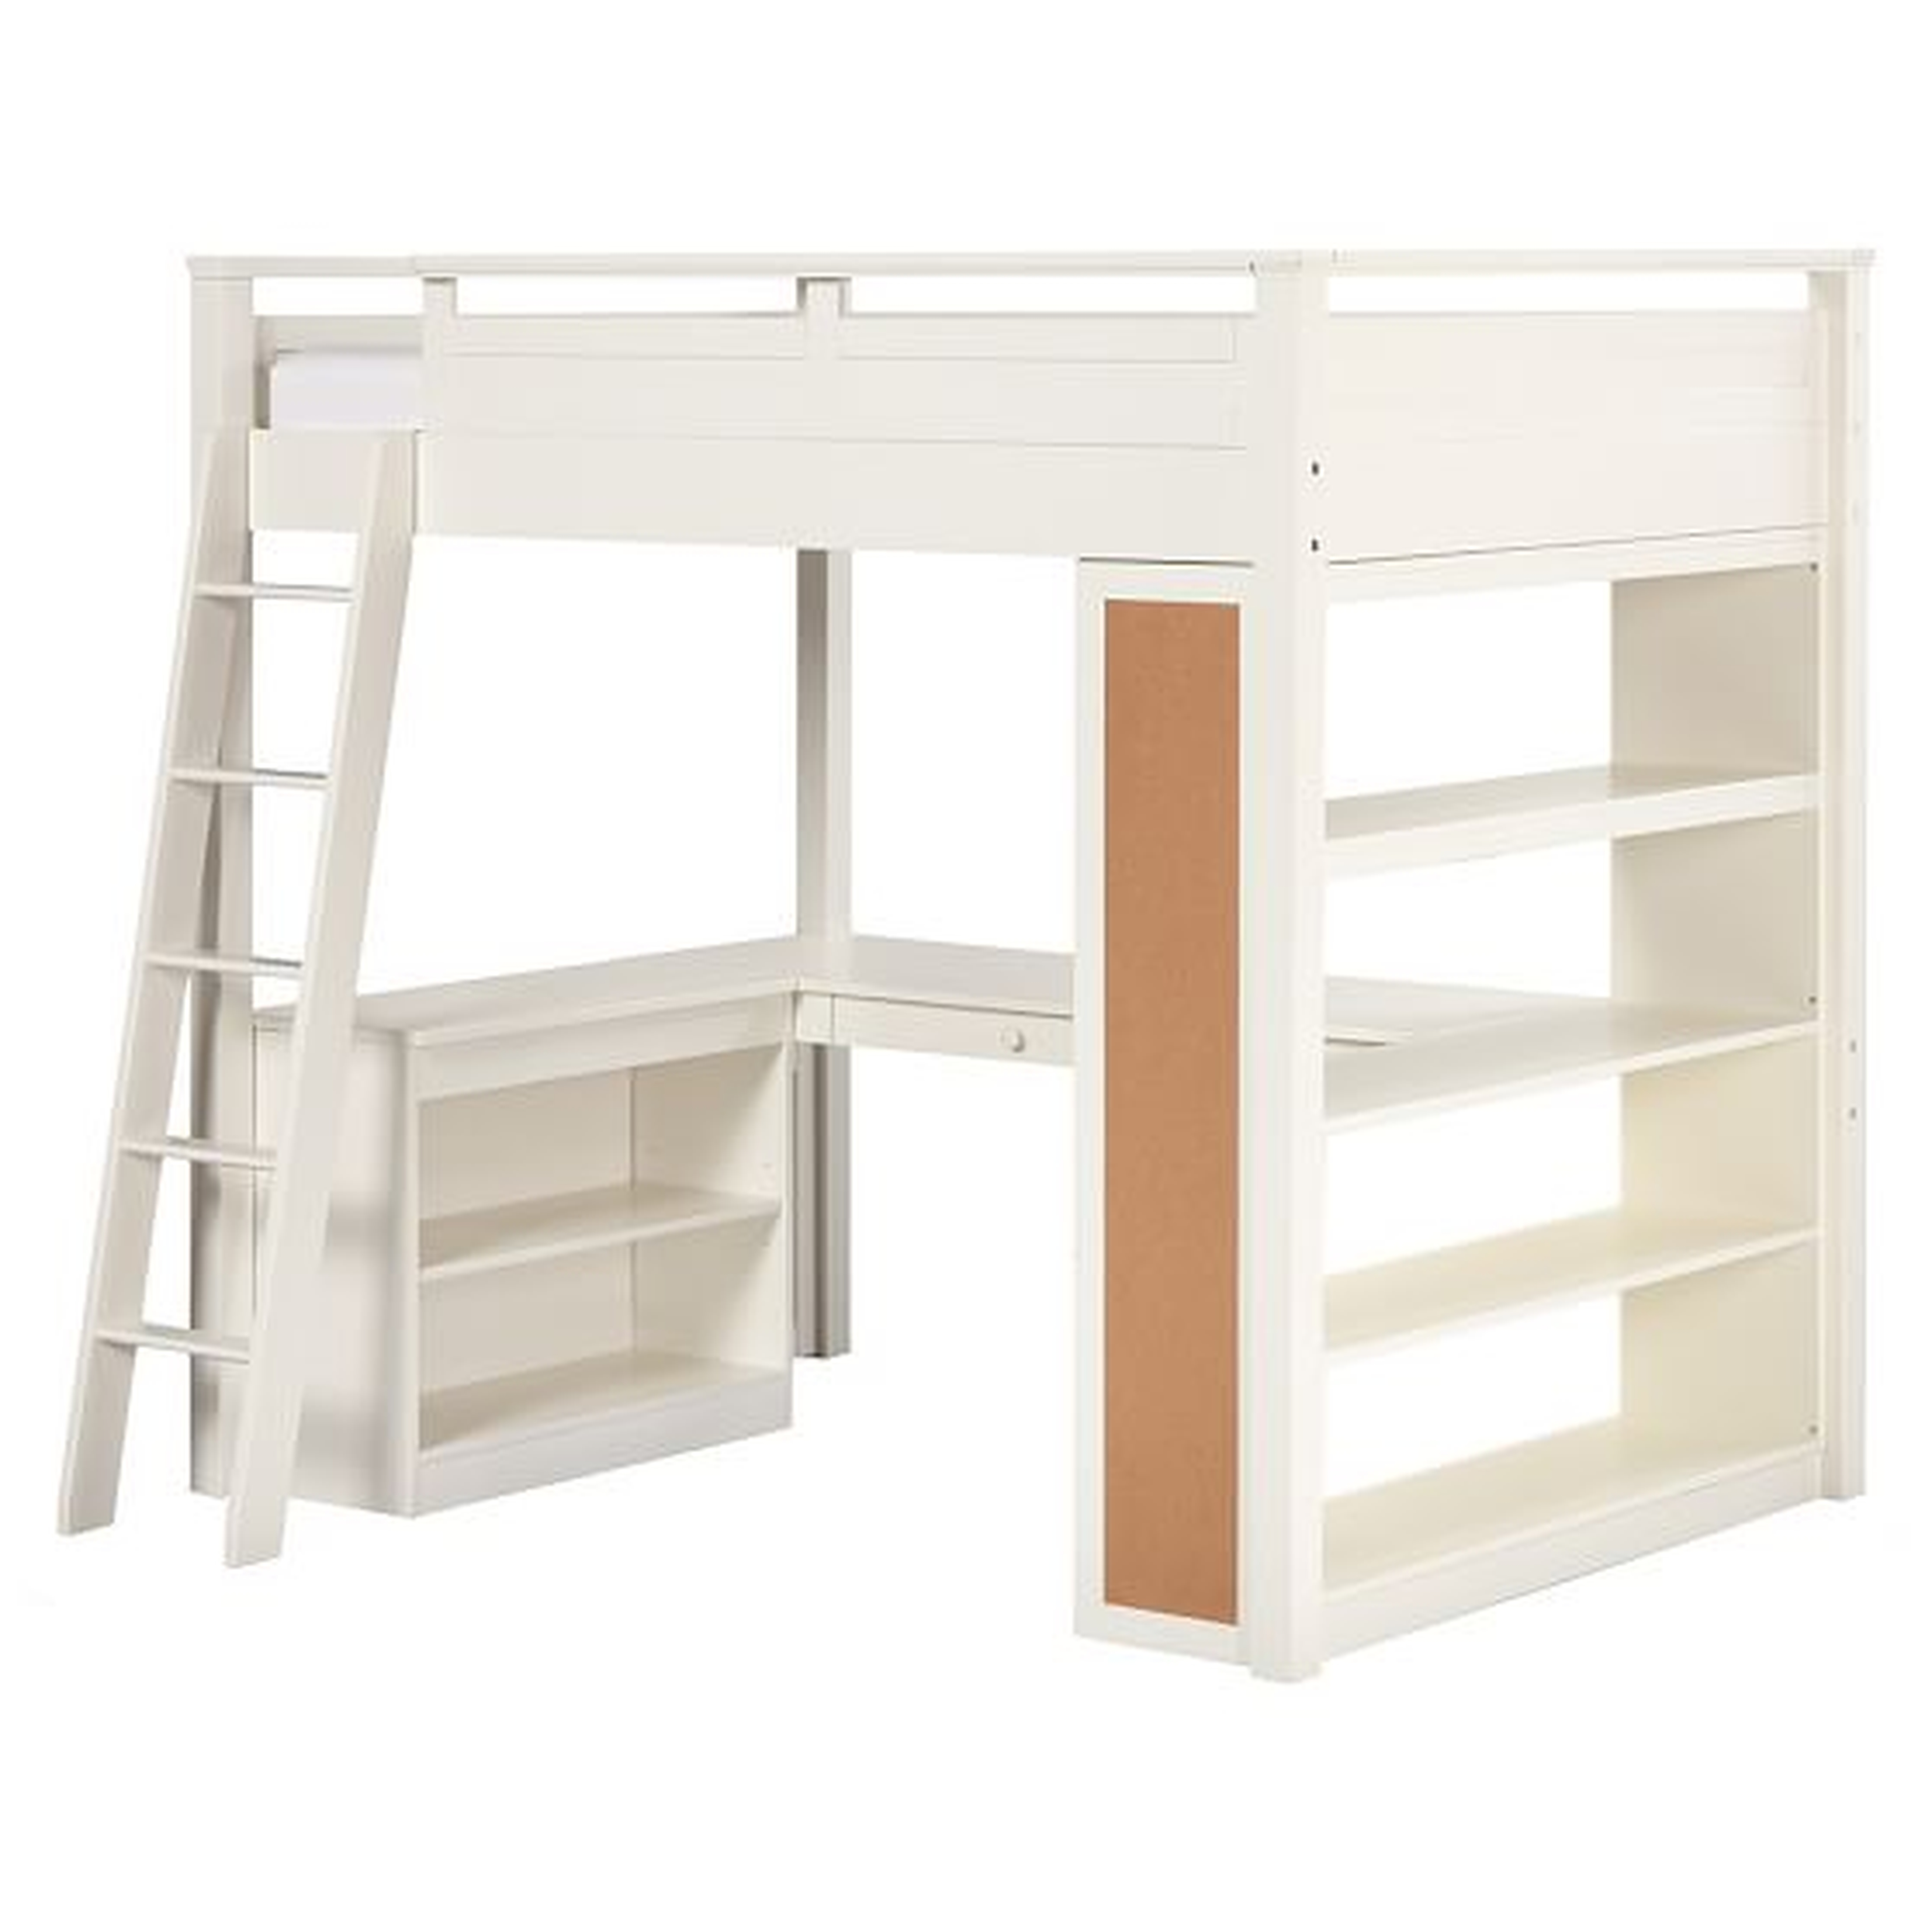 Sleep & Study® Loft- Simply white - Pottery Barn Teen